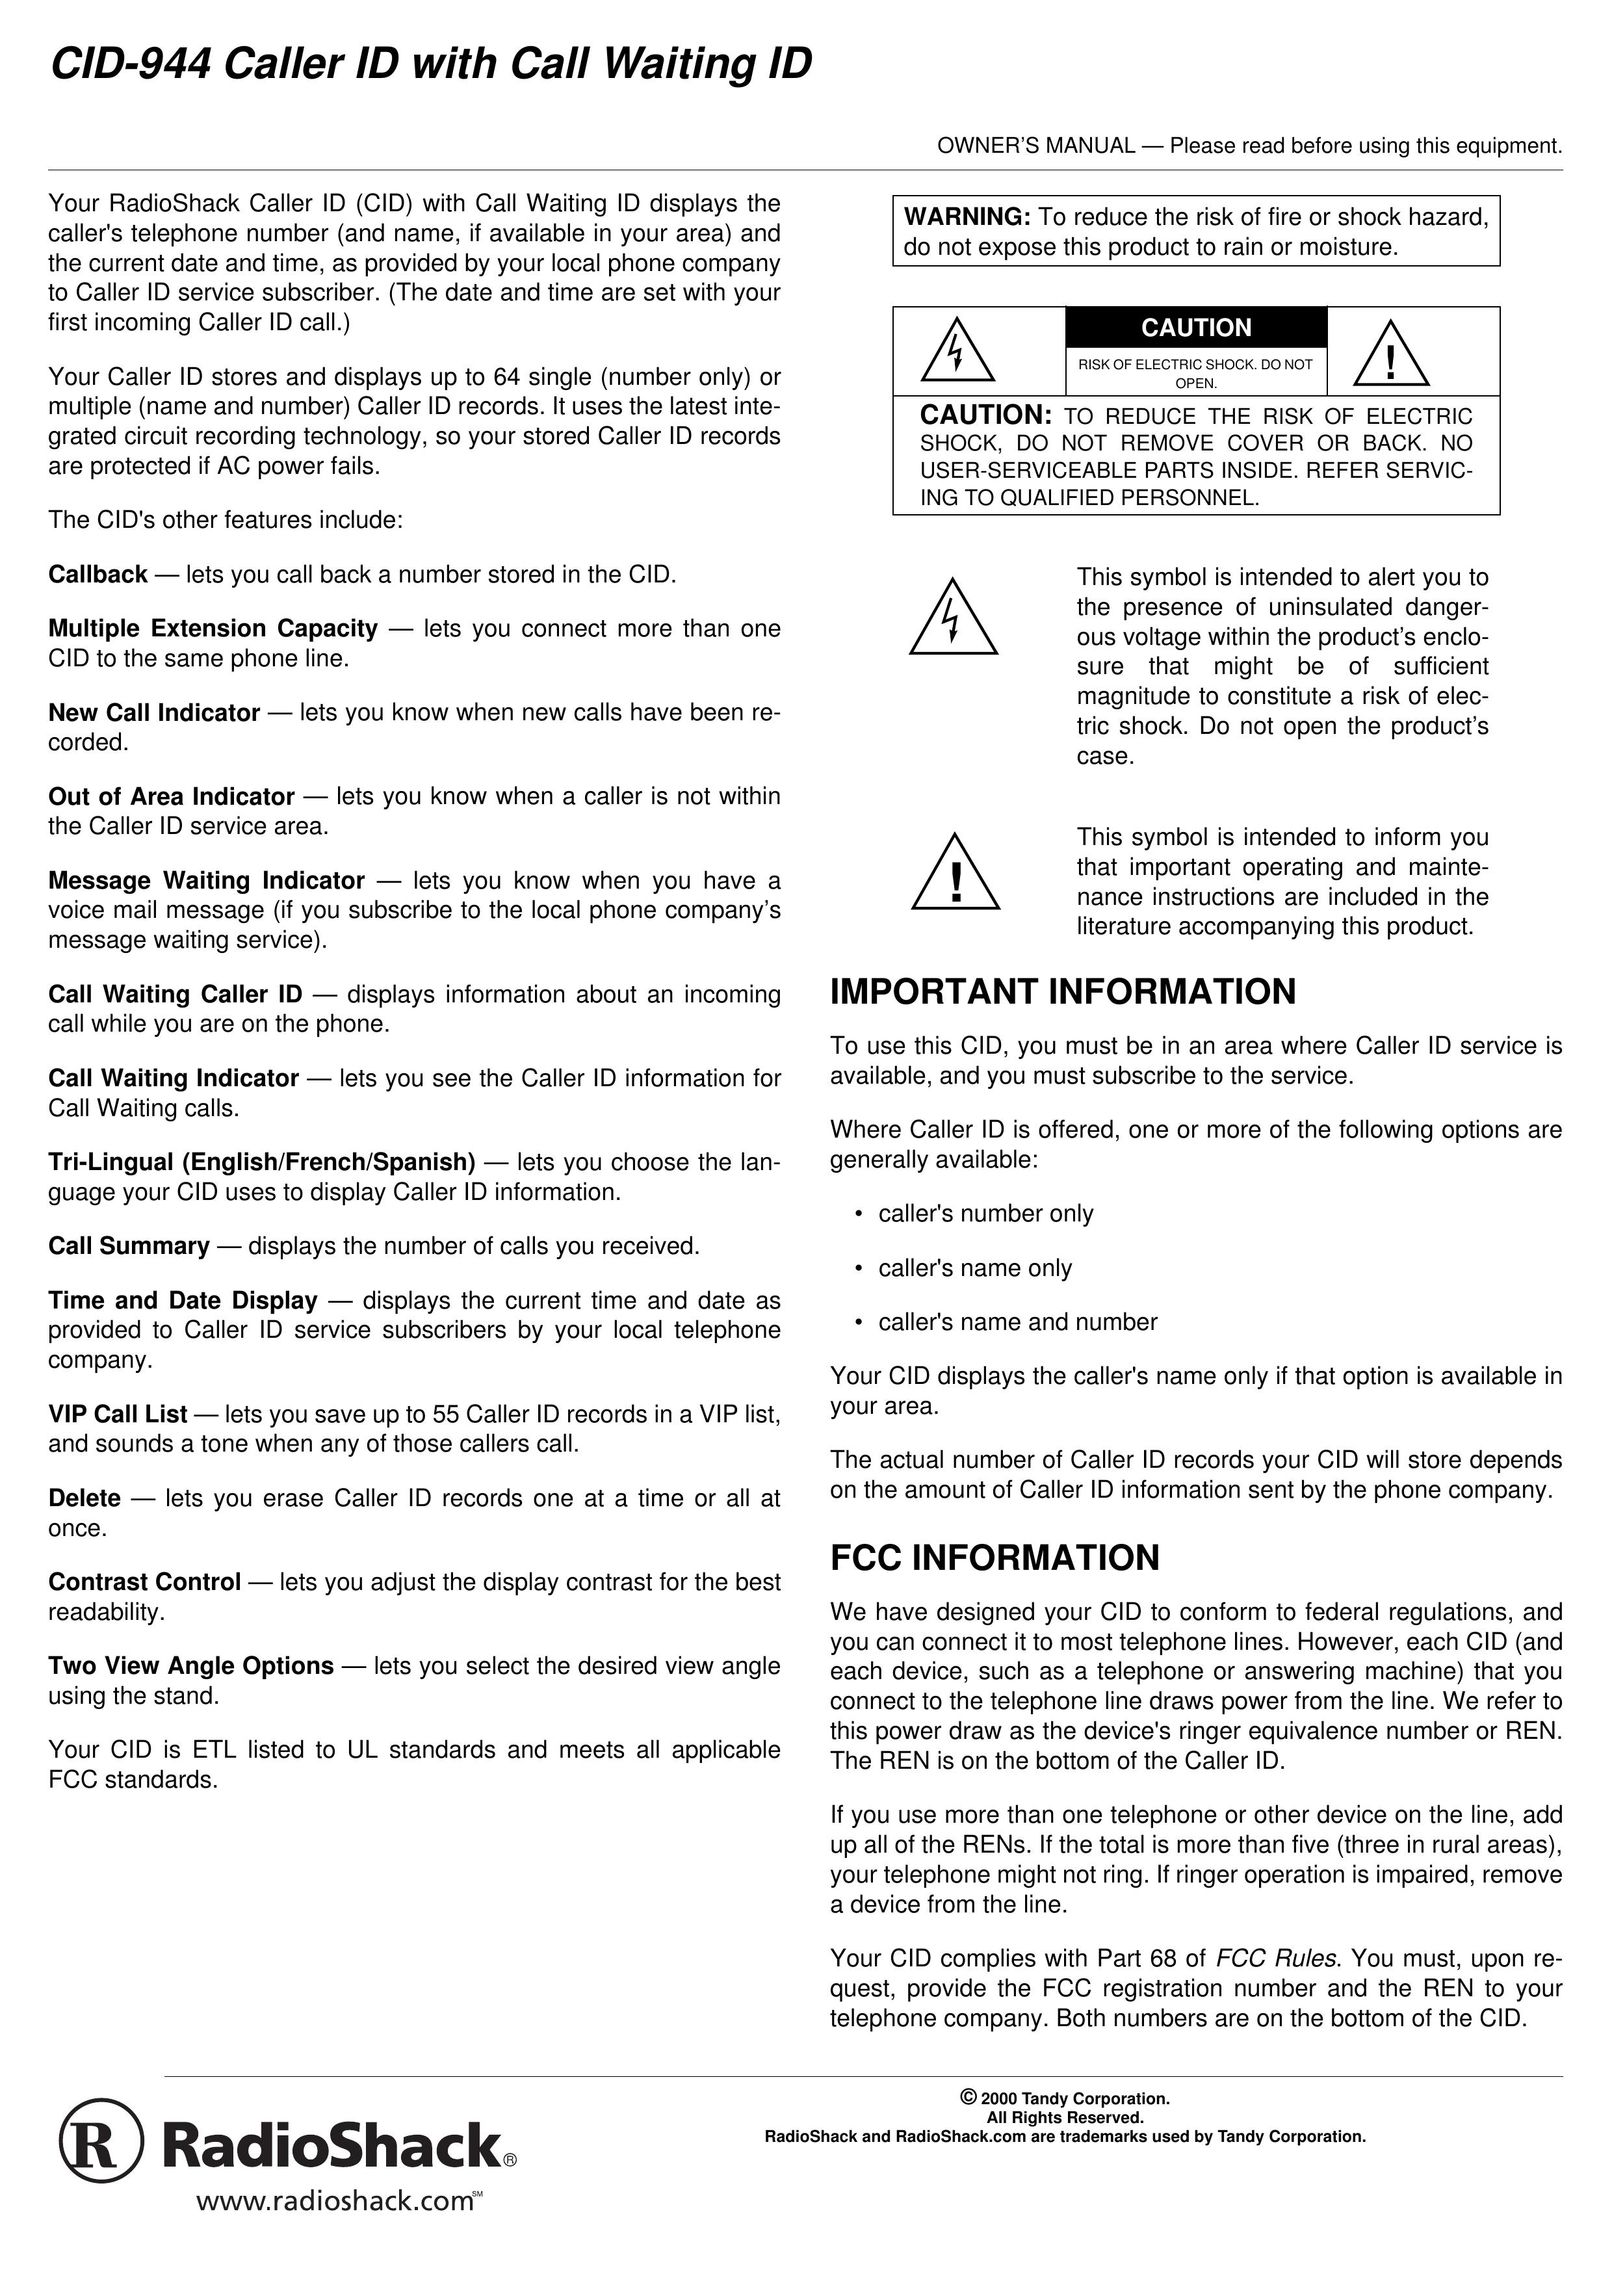 Radio Shack CID-944 Caller ID Box User Manual (Page 1)